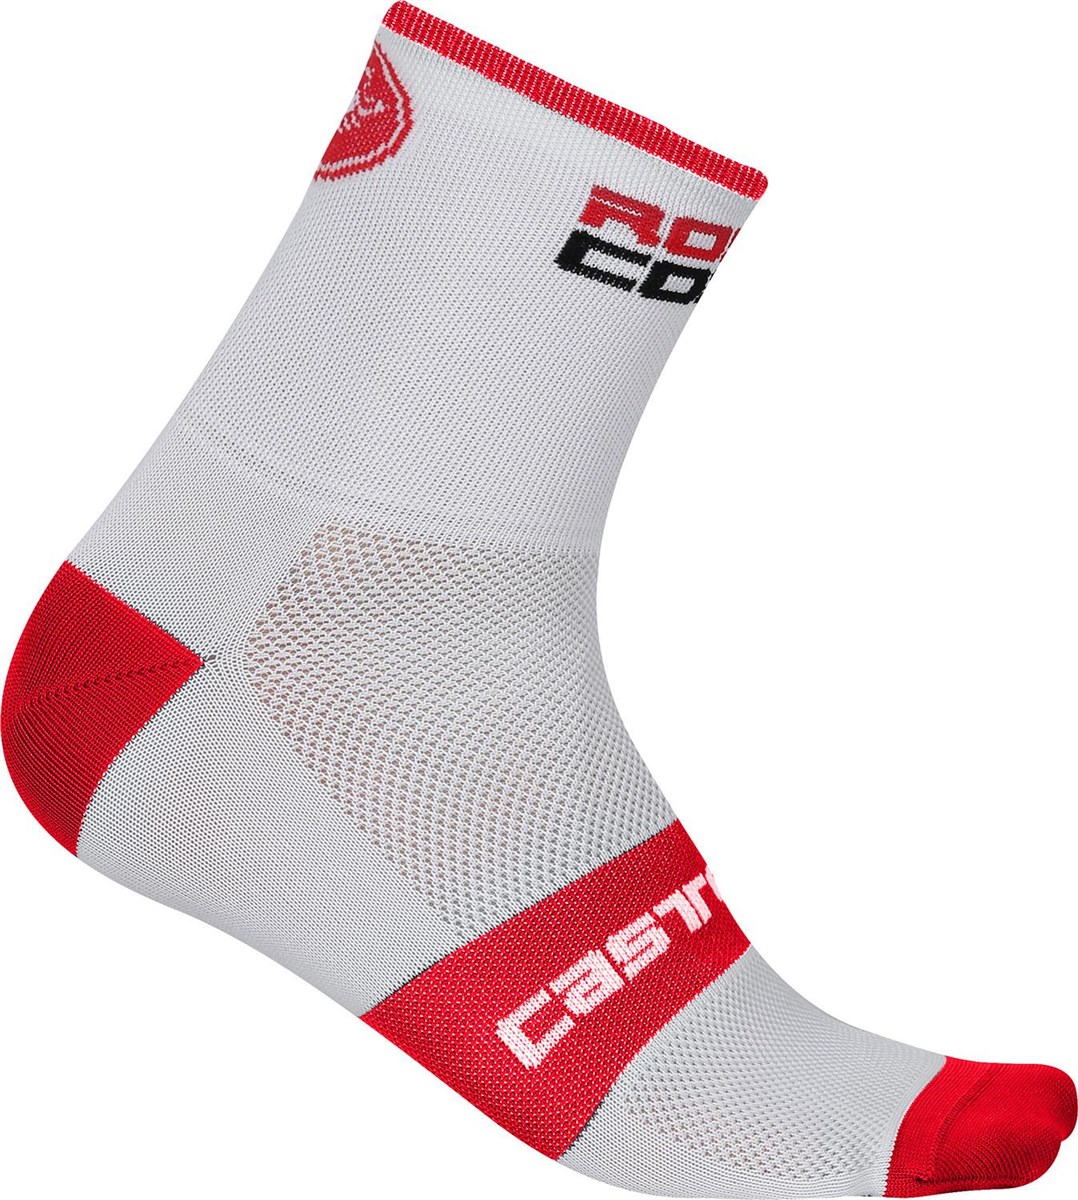 Castelli Rosso Corsa 9 Cycling Socks